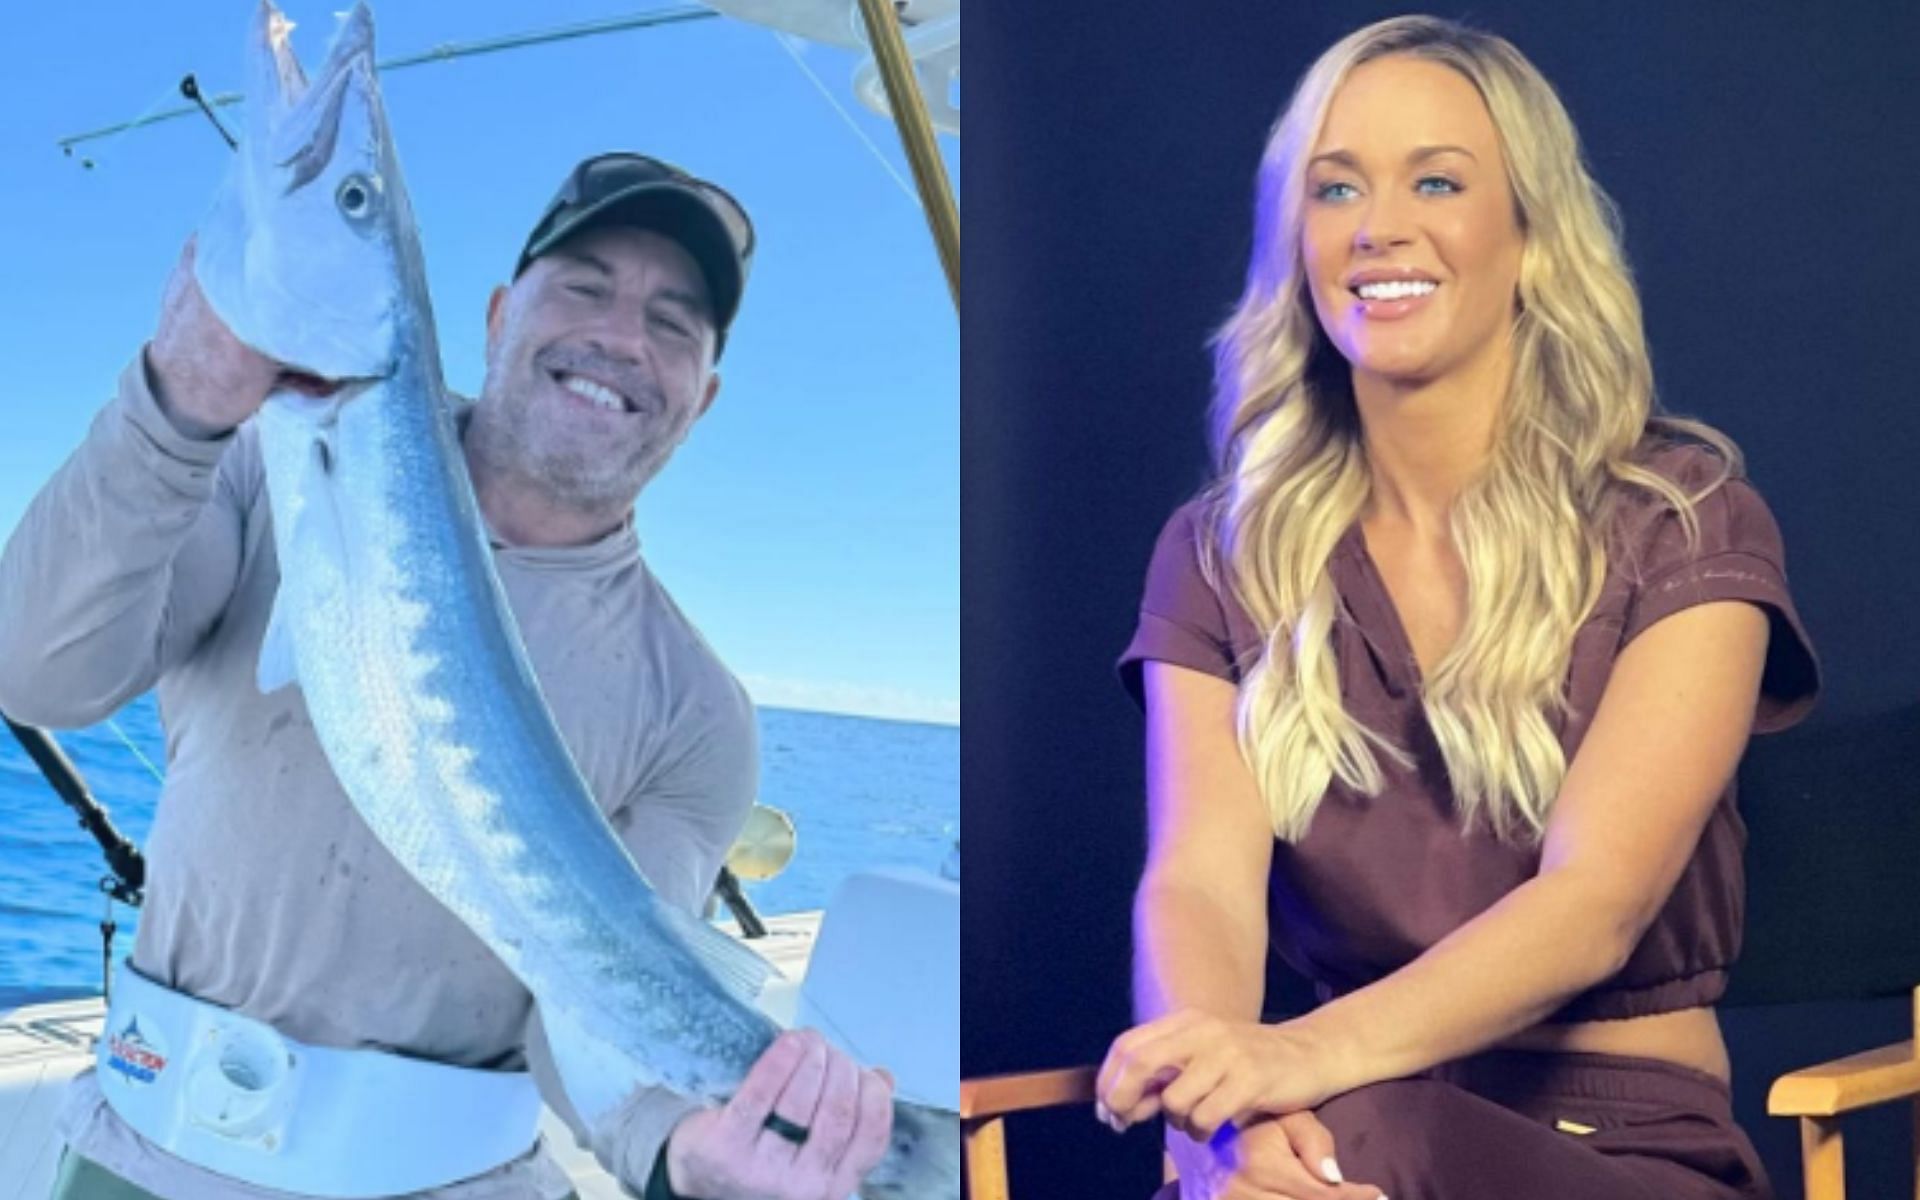 Laura Sanko [Right] was impressed after seeing that Joe Rogan [Left] caught a barracuda [Image courtesy: @joerogan - Instagram]